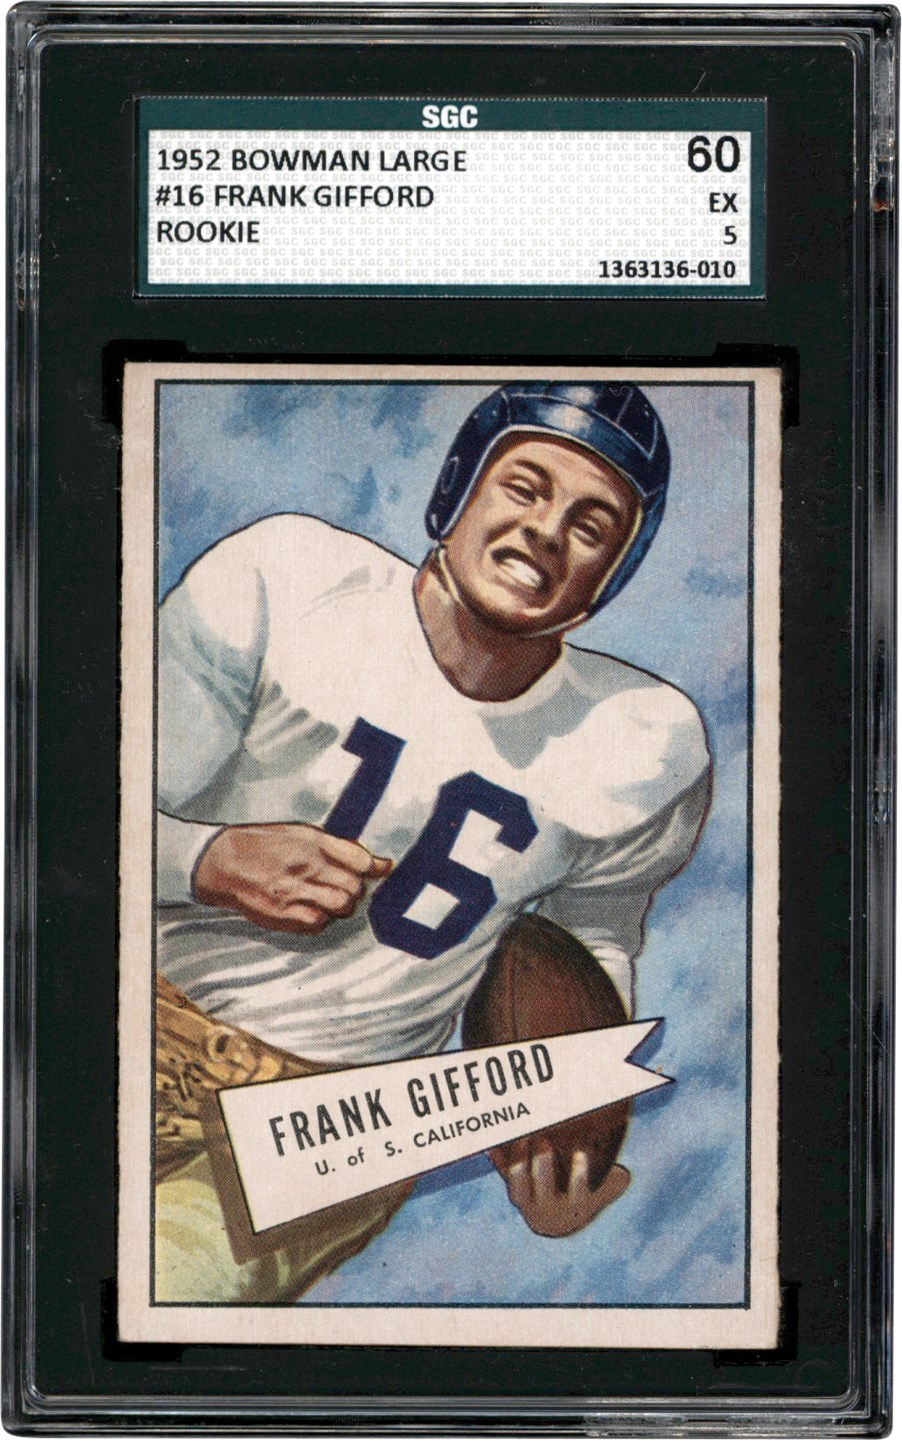 - 1952 Bowman Large Football #16 Frank Gifford Rookie Card SGC EX 5